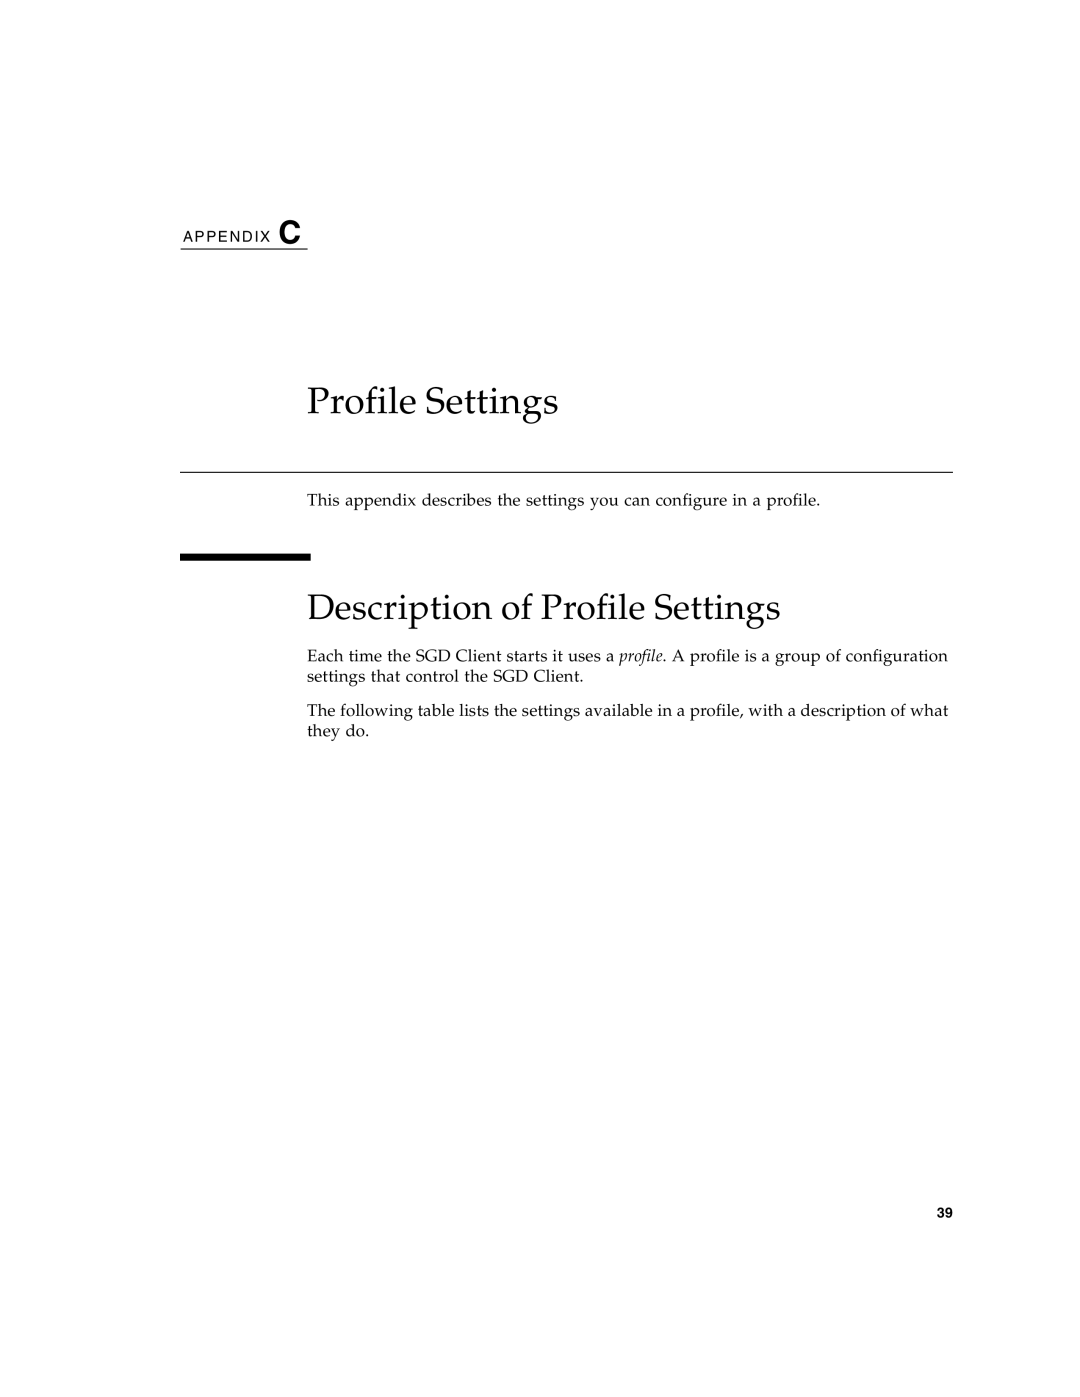 Sun Microsystems 4.5 manual Description of Profile Settings 